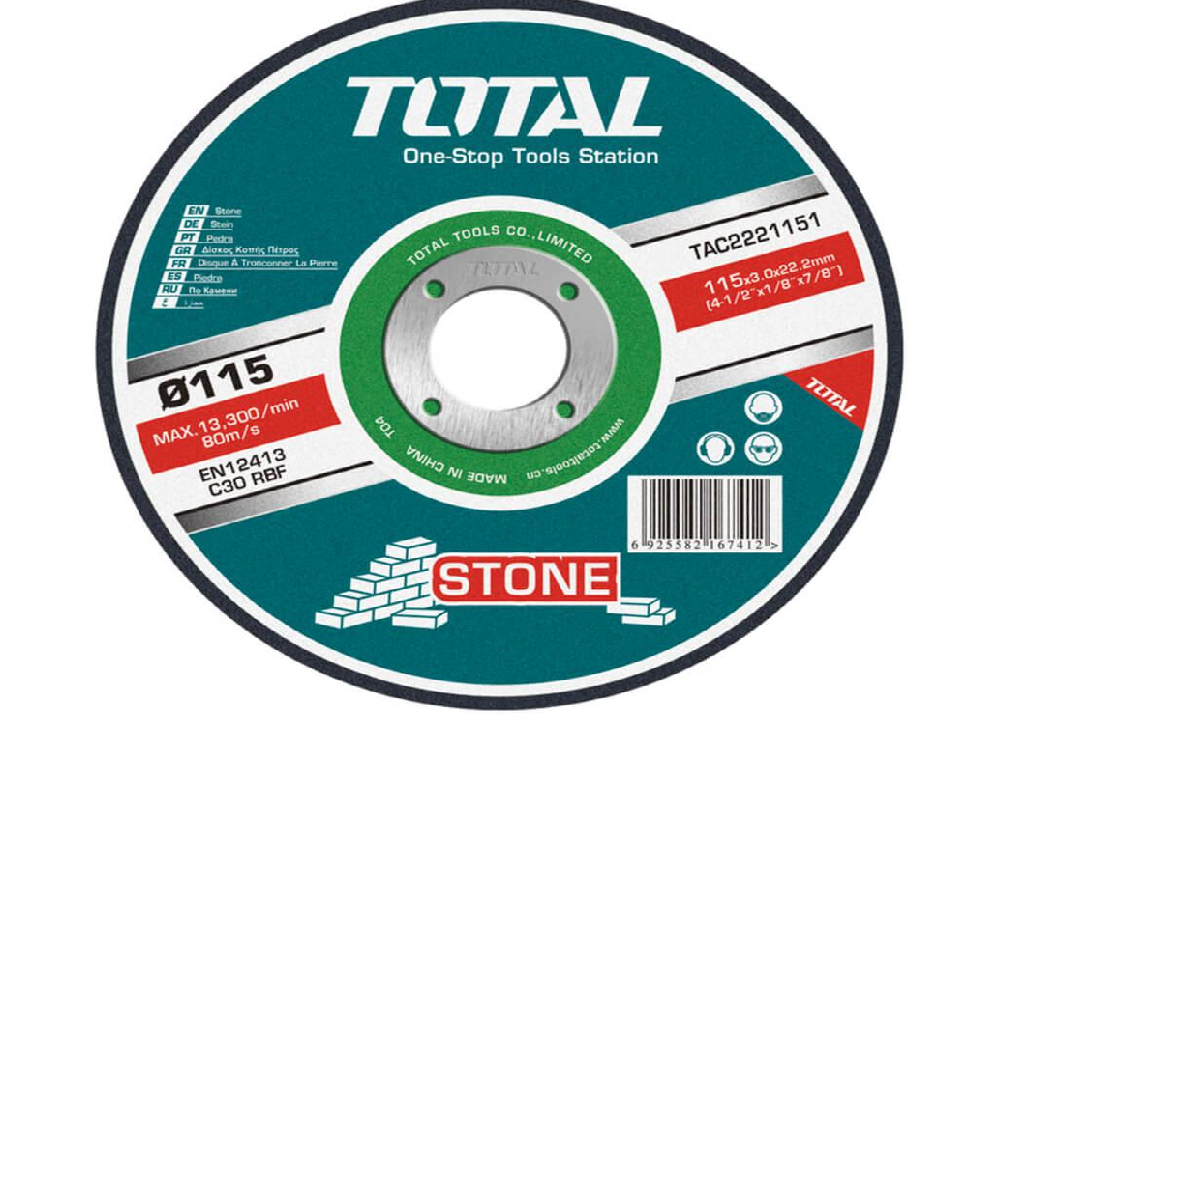 Total δίσκος κοπής δομικών υλικών-πέτρας 115 Χ 3mm (TAC2221151)